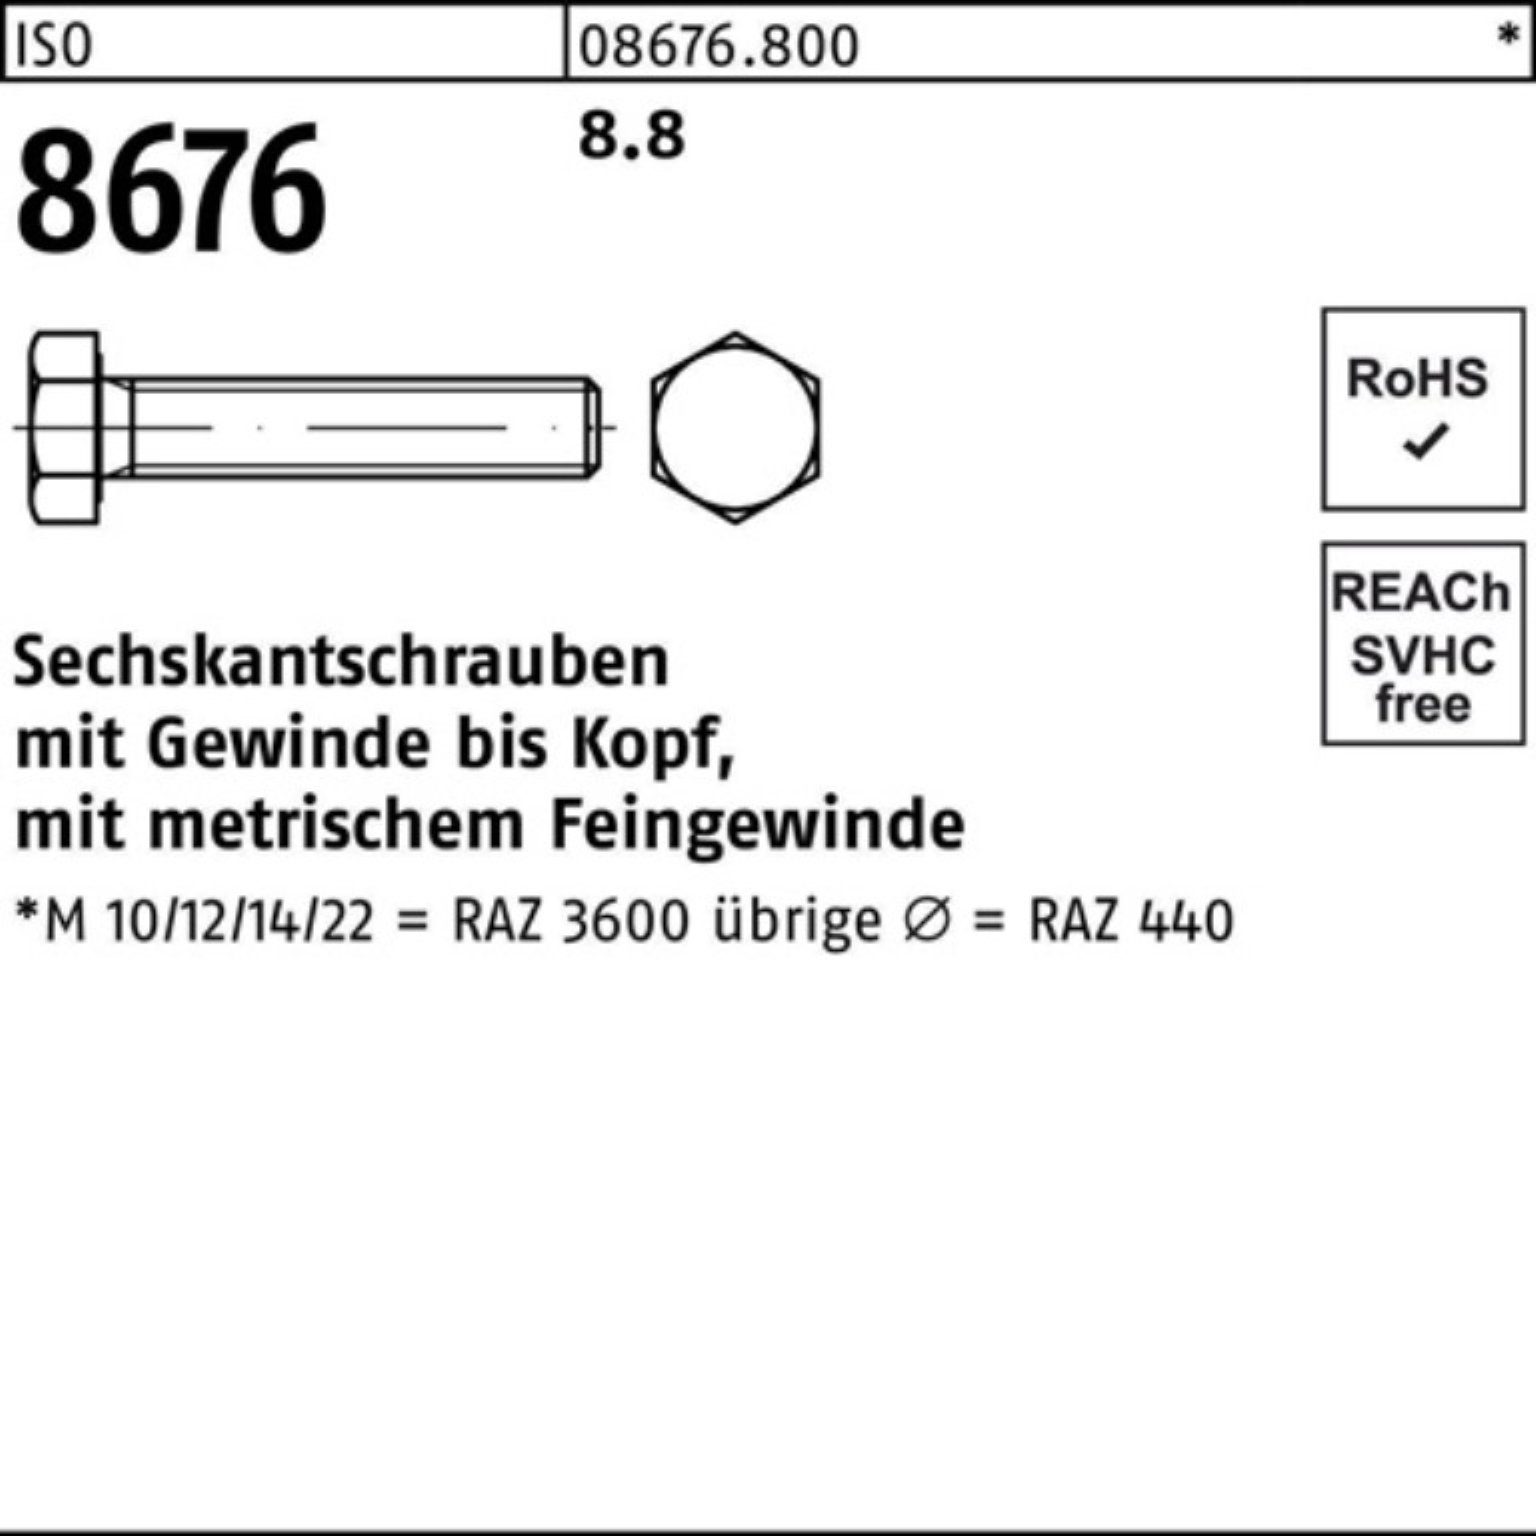 Reyher Sechskantschraube 200er Pack Sechskantschraube VG 50 8.8 200 8 Stück 8676 ISO ISO M8x1x